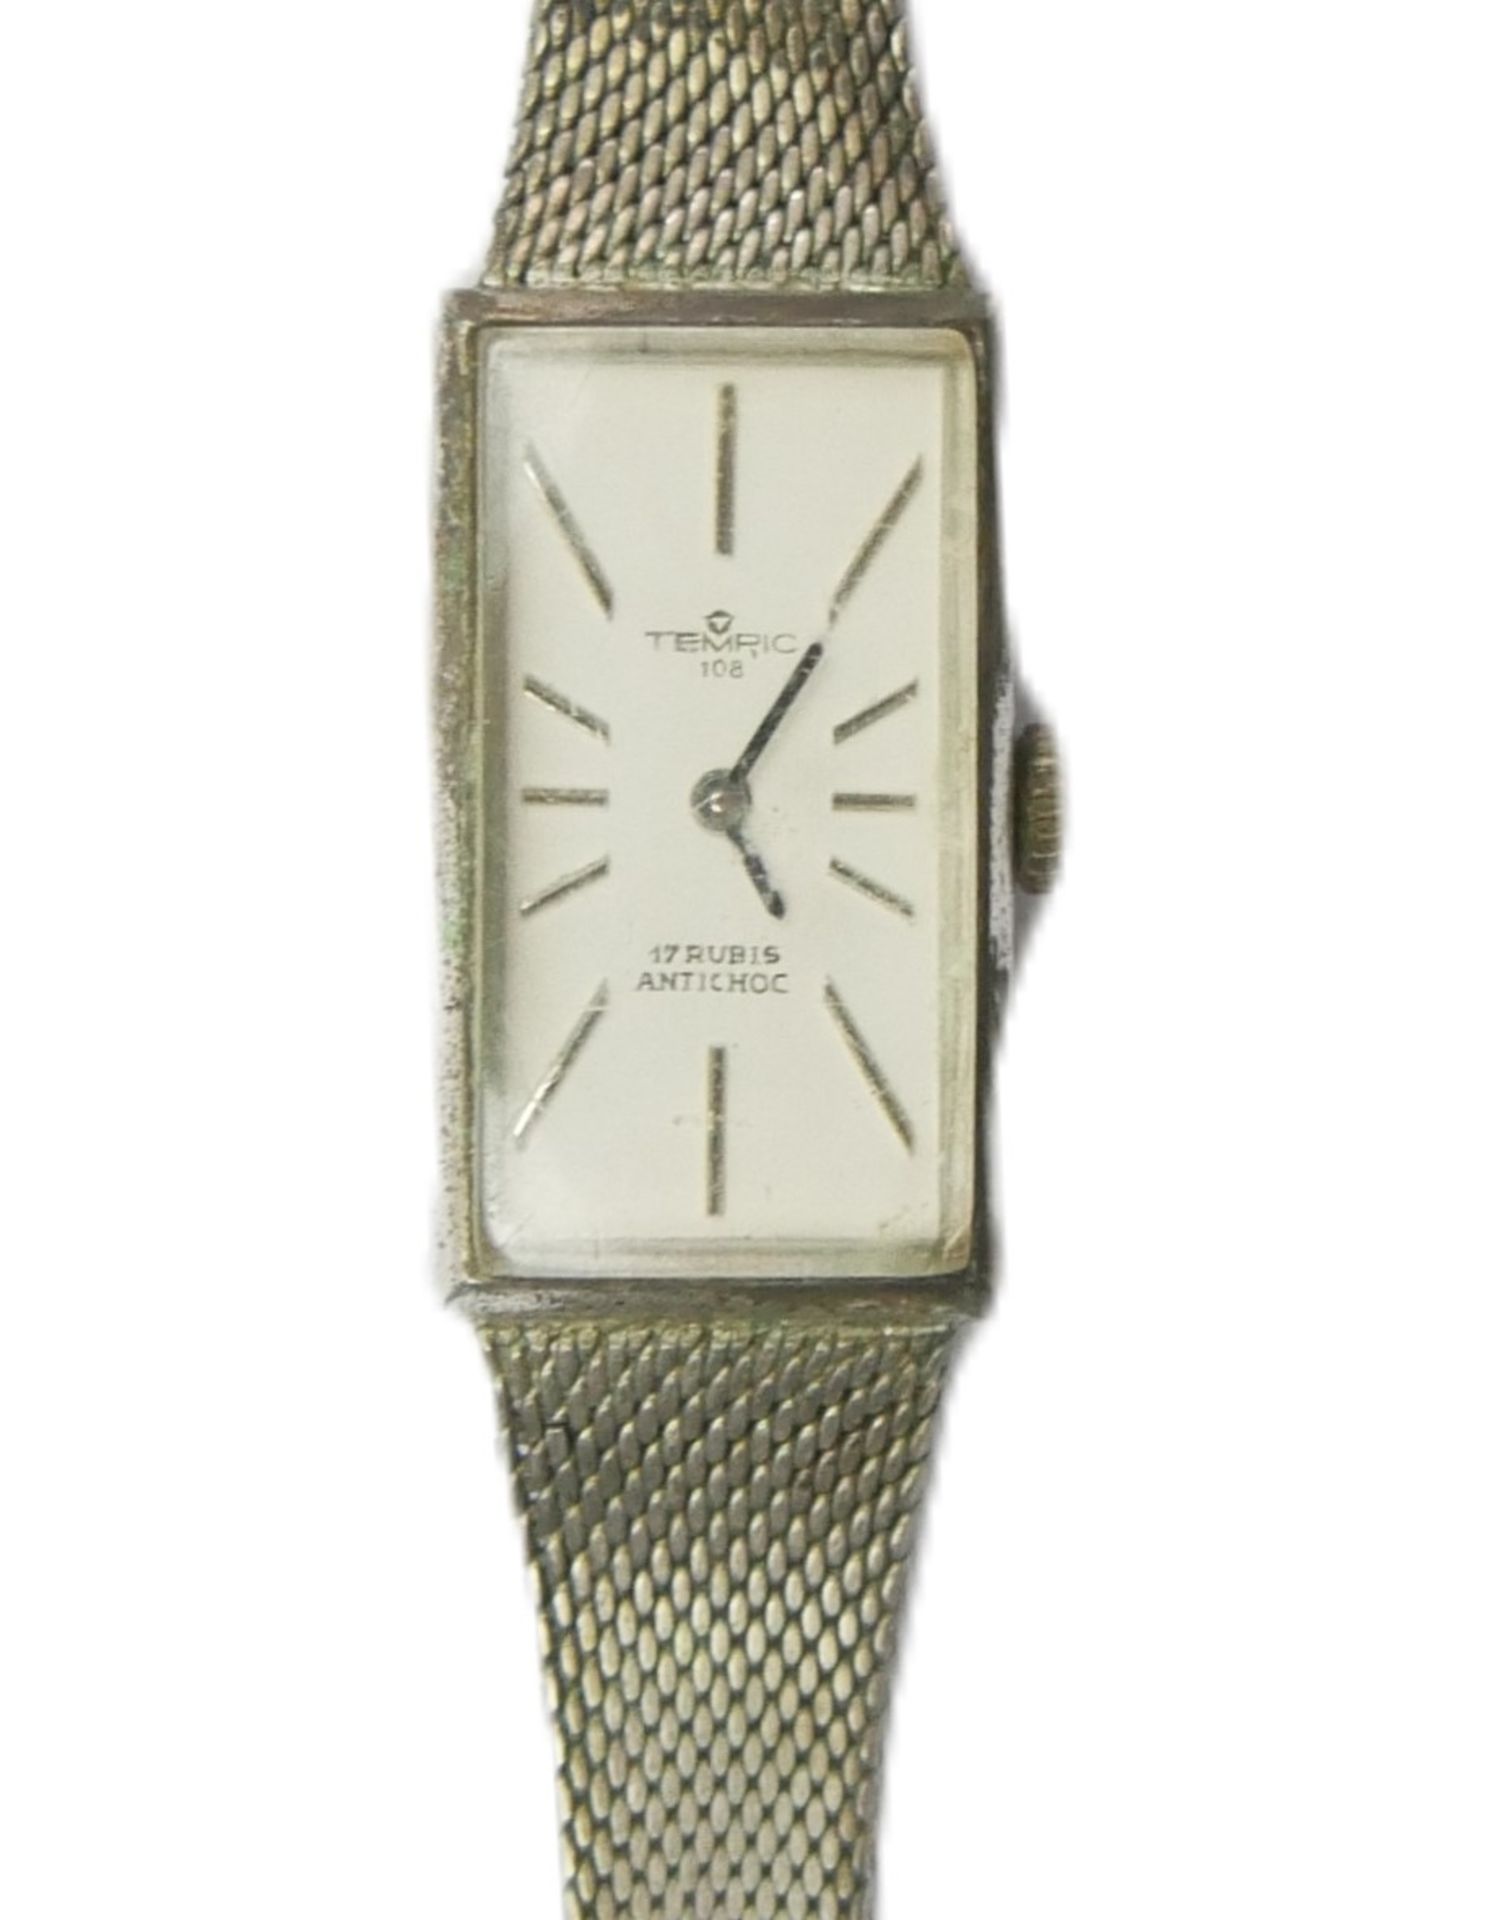 Damen Armbanduhr TEMPIC, 835er Silber. Mechanisch, Funktion geprüft - Image 2 of 2